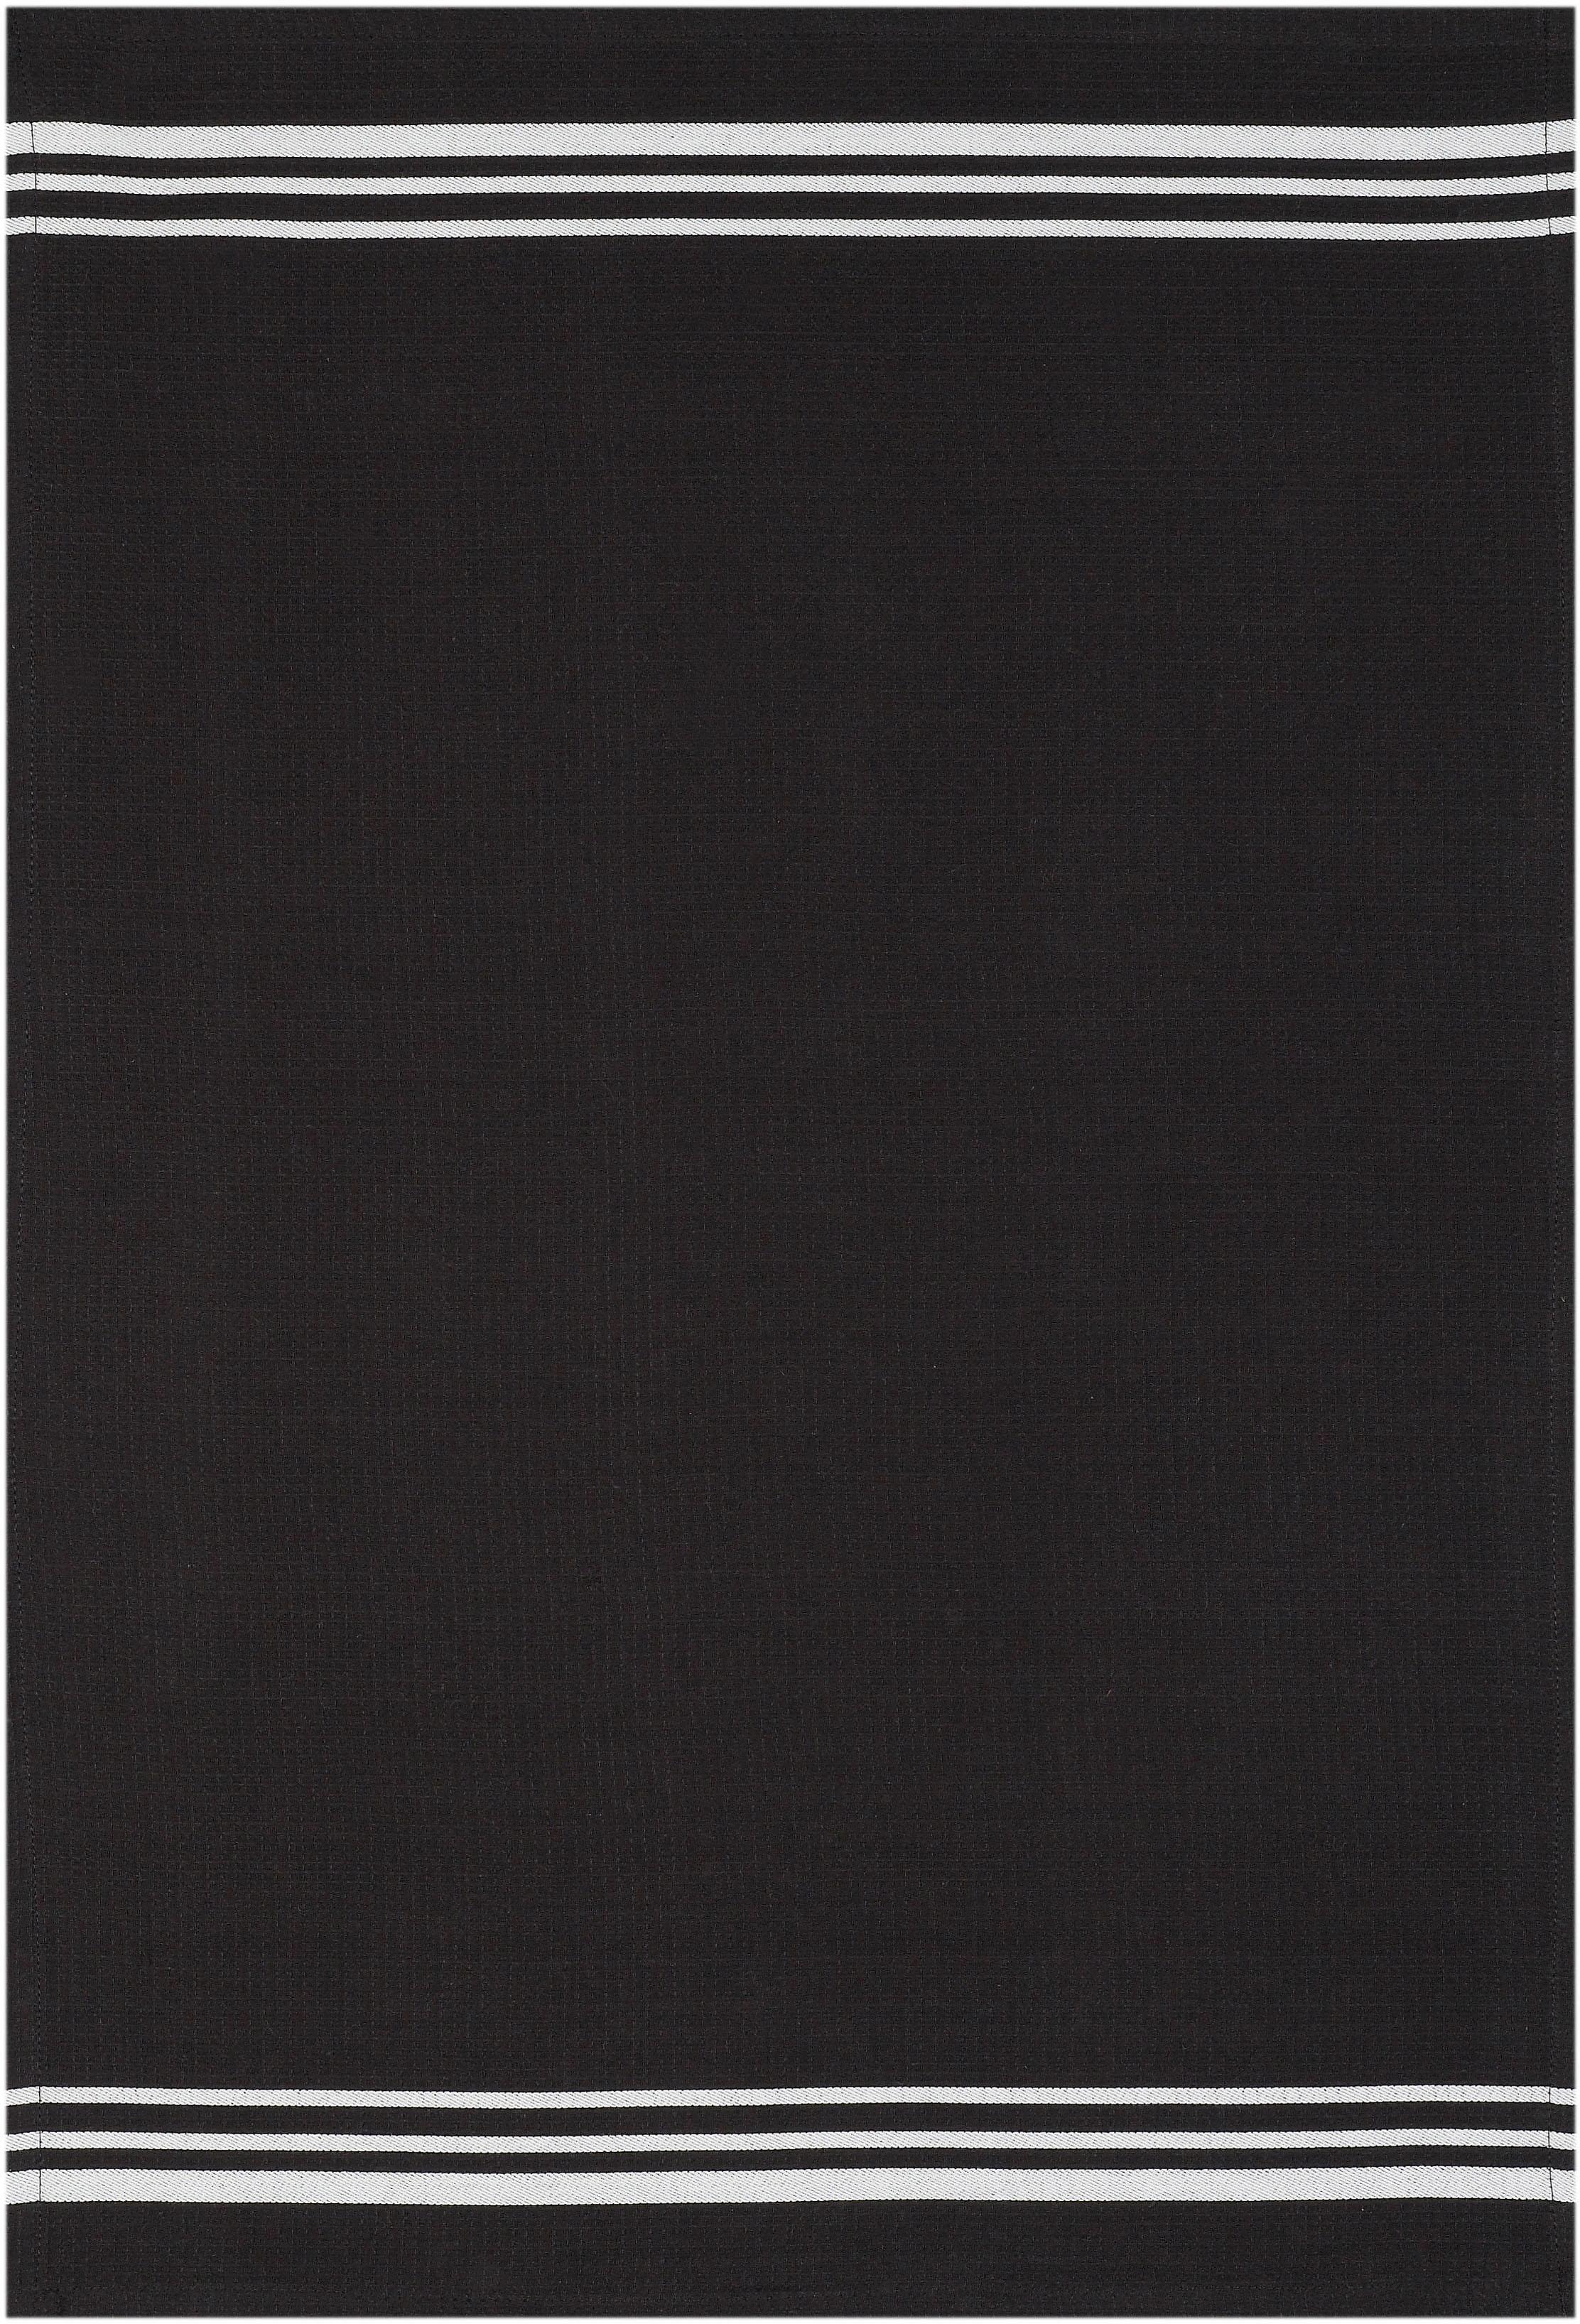 Black Friday DDDDD Topflappen »Kit, 21x21 cm, Baumwolle«, (Set, 2 tlg.) |  BAUR